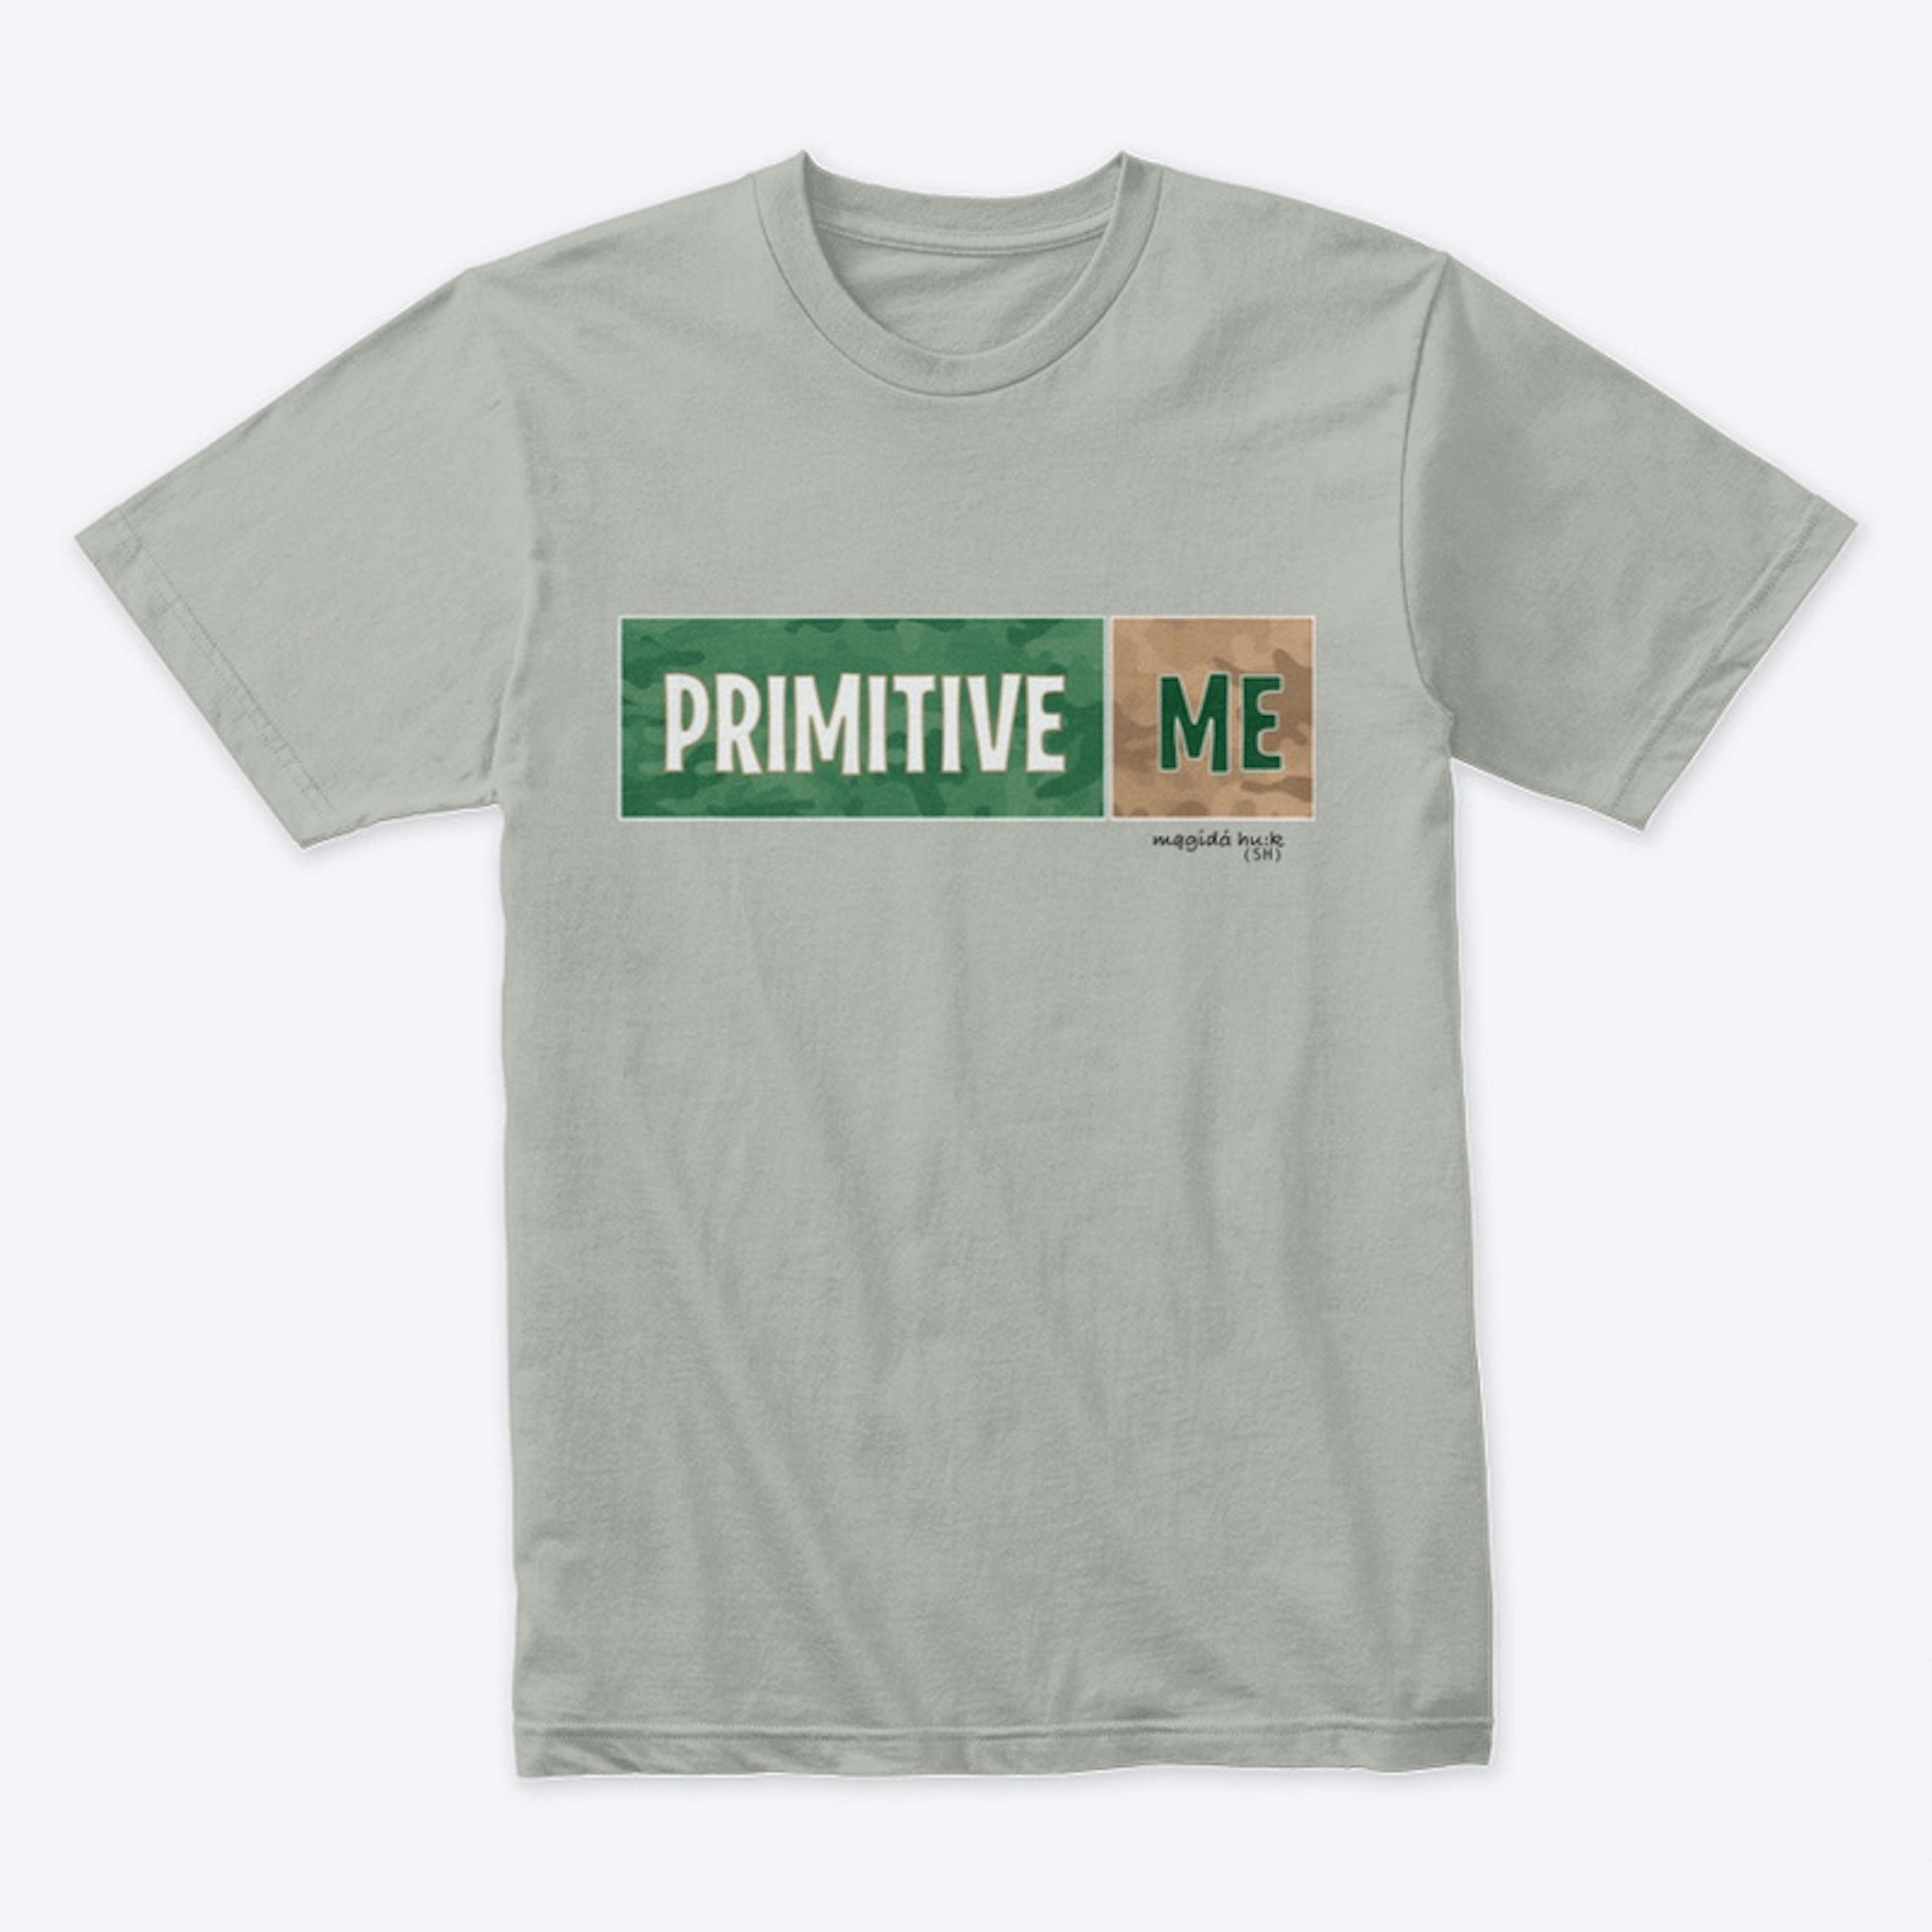 Primitive Me (Mountain Man)